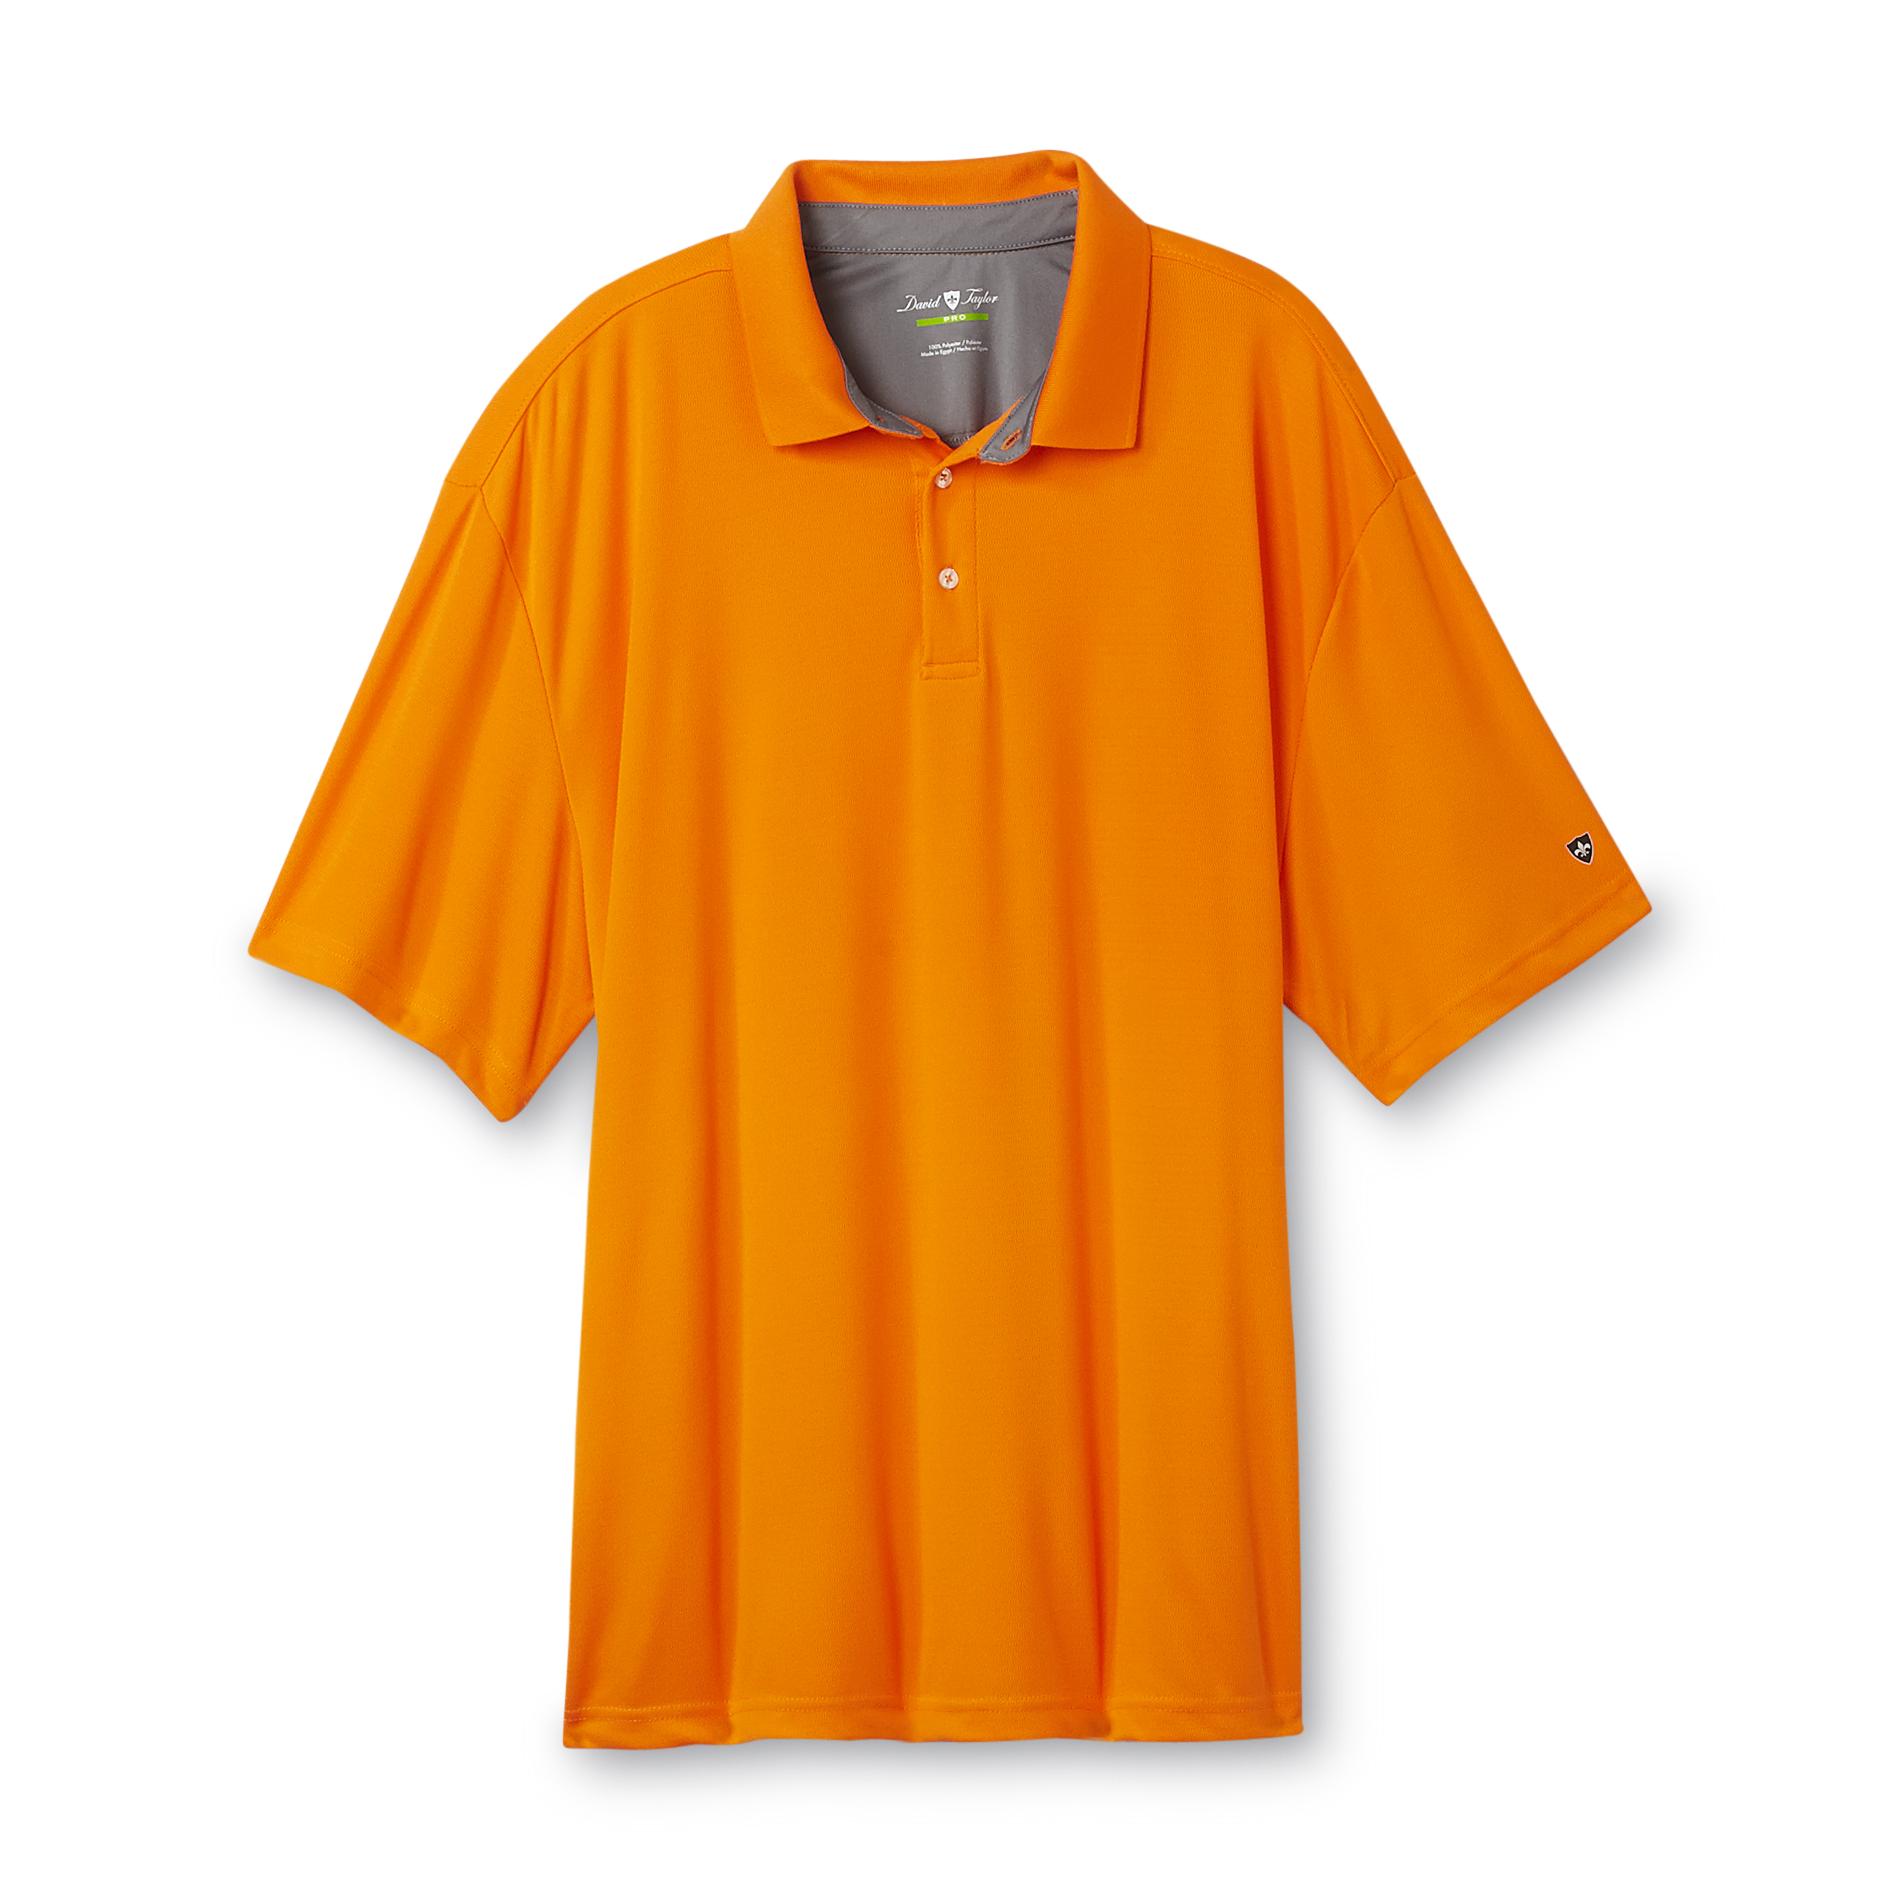 David Taylor Collection Men's Big & Tall Athletic Polo Shirt